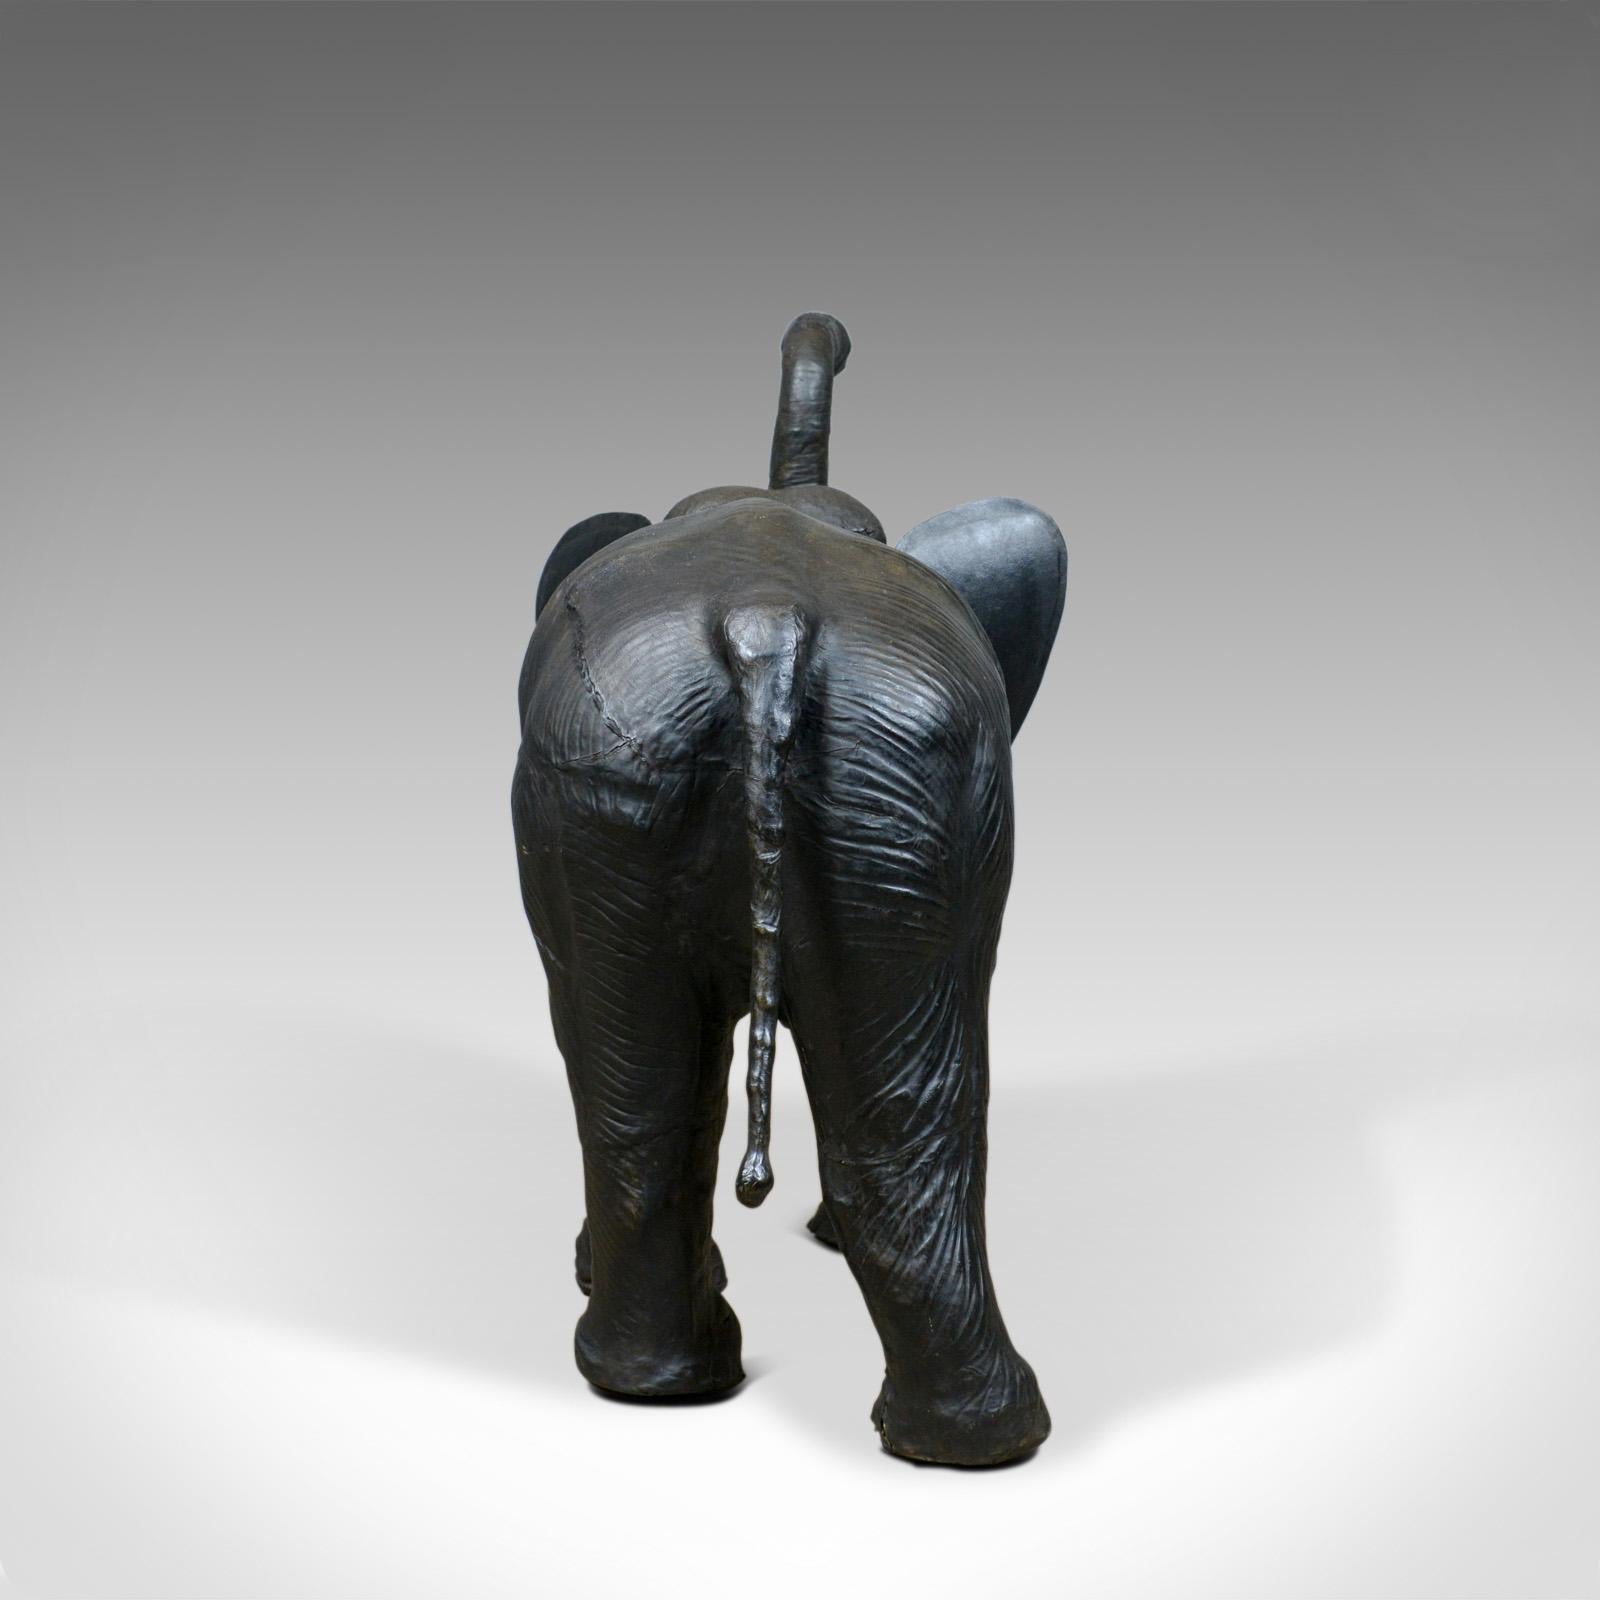 3 foot tall elephant statue